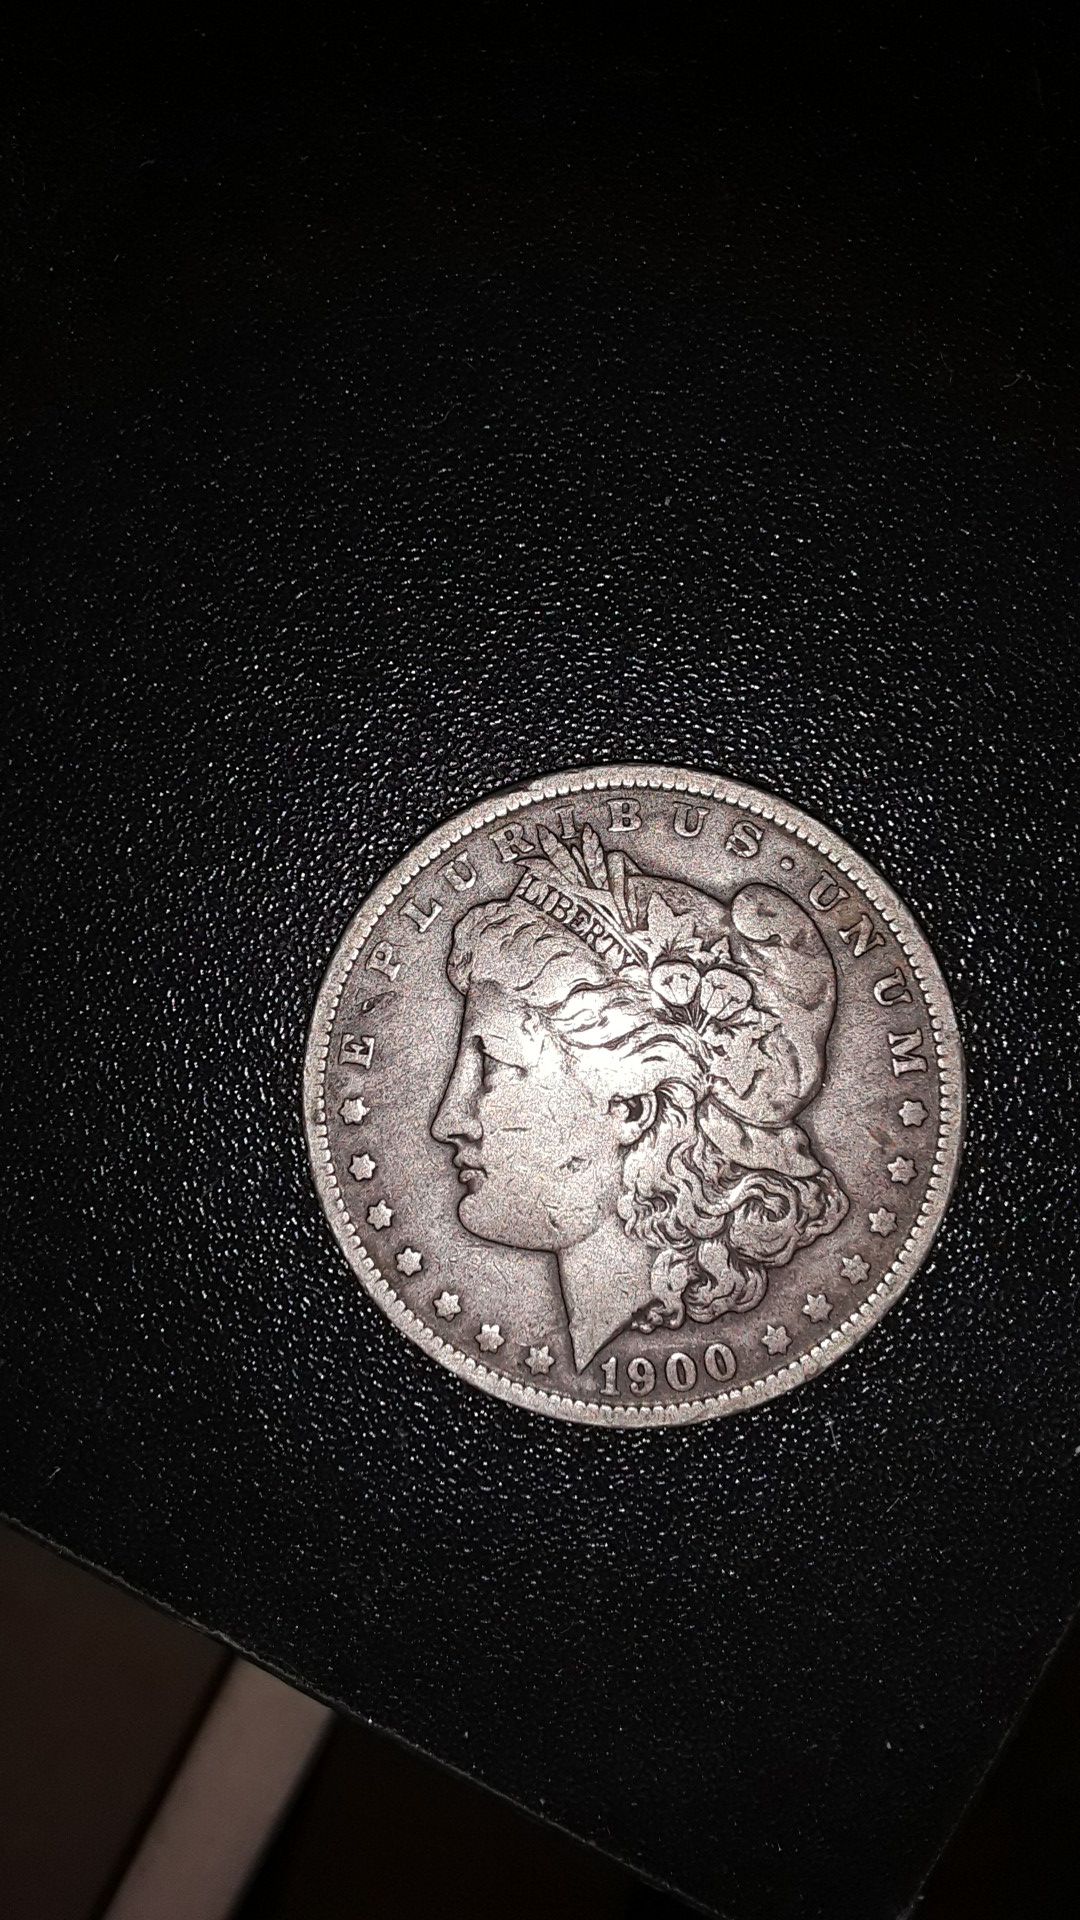 1990 Morgan dollar.